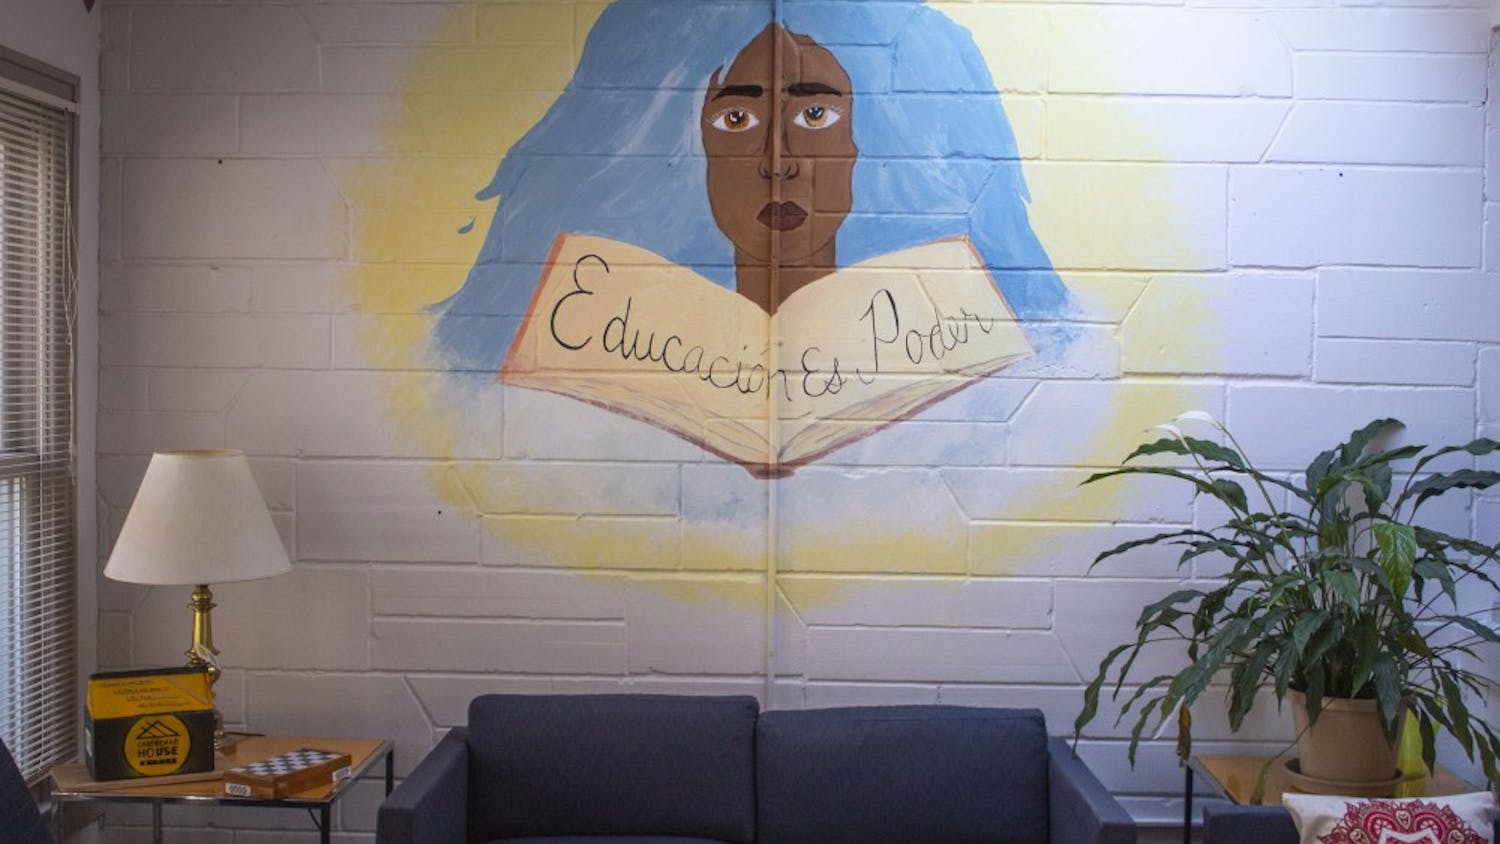 "Education is Power" mural at La Casa Latino Culture Center